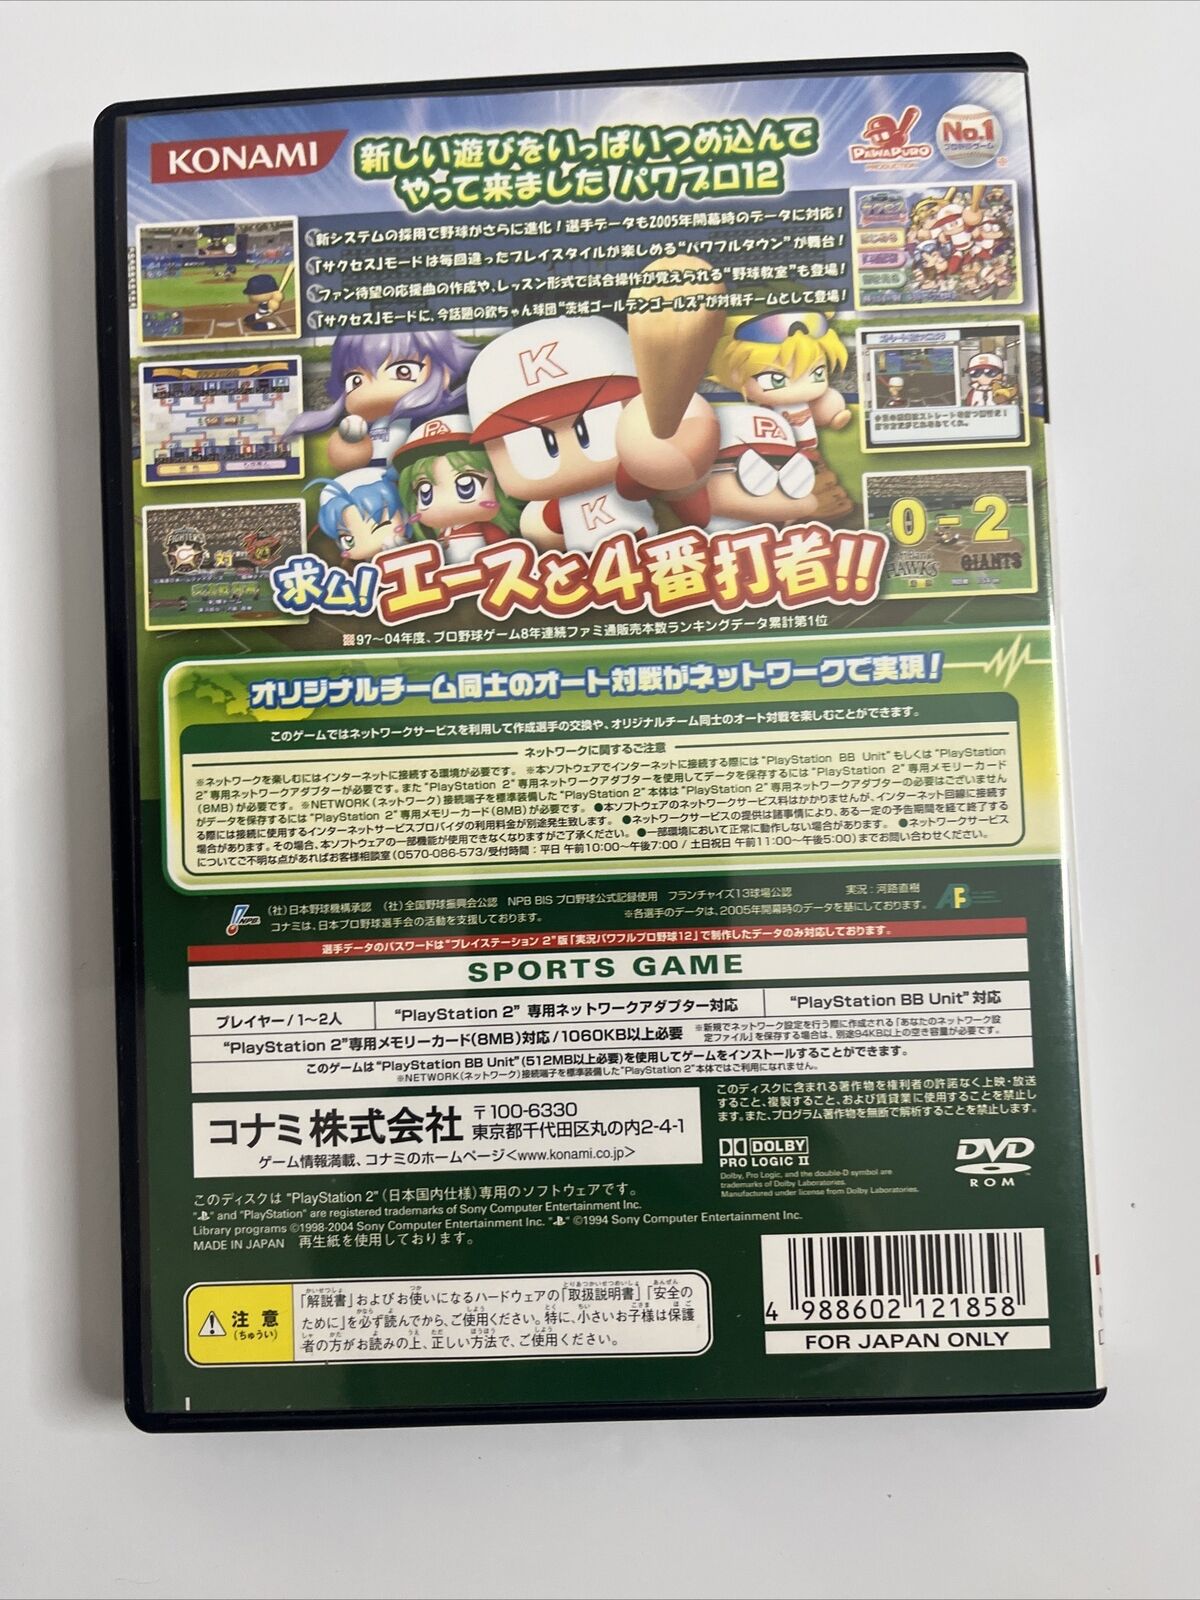 Jikkyou Powerful Pro Yakyuu 12 Baseball  PlayStation PS2 NTSC-J JAPAN Complete